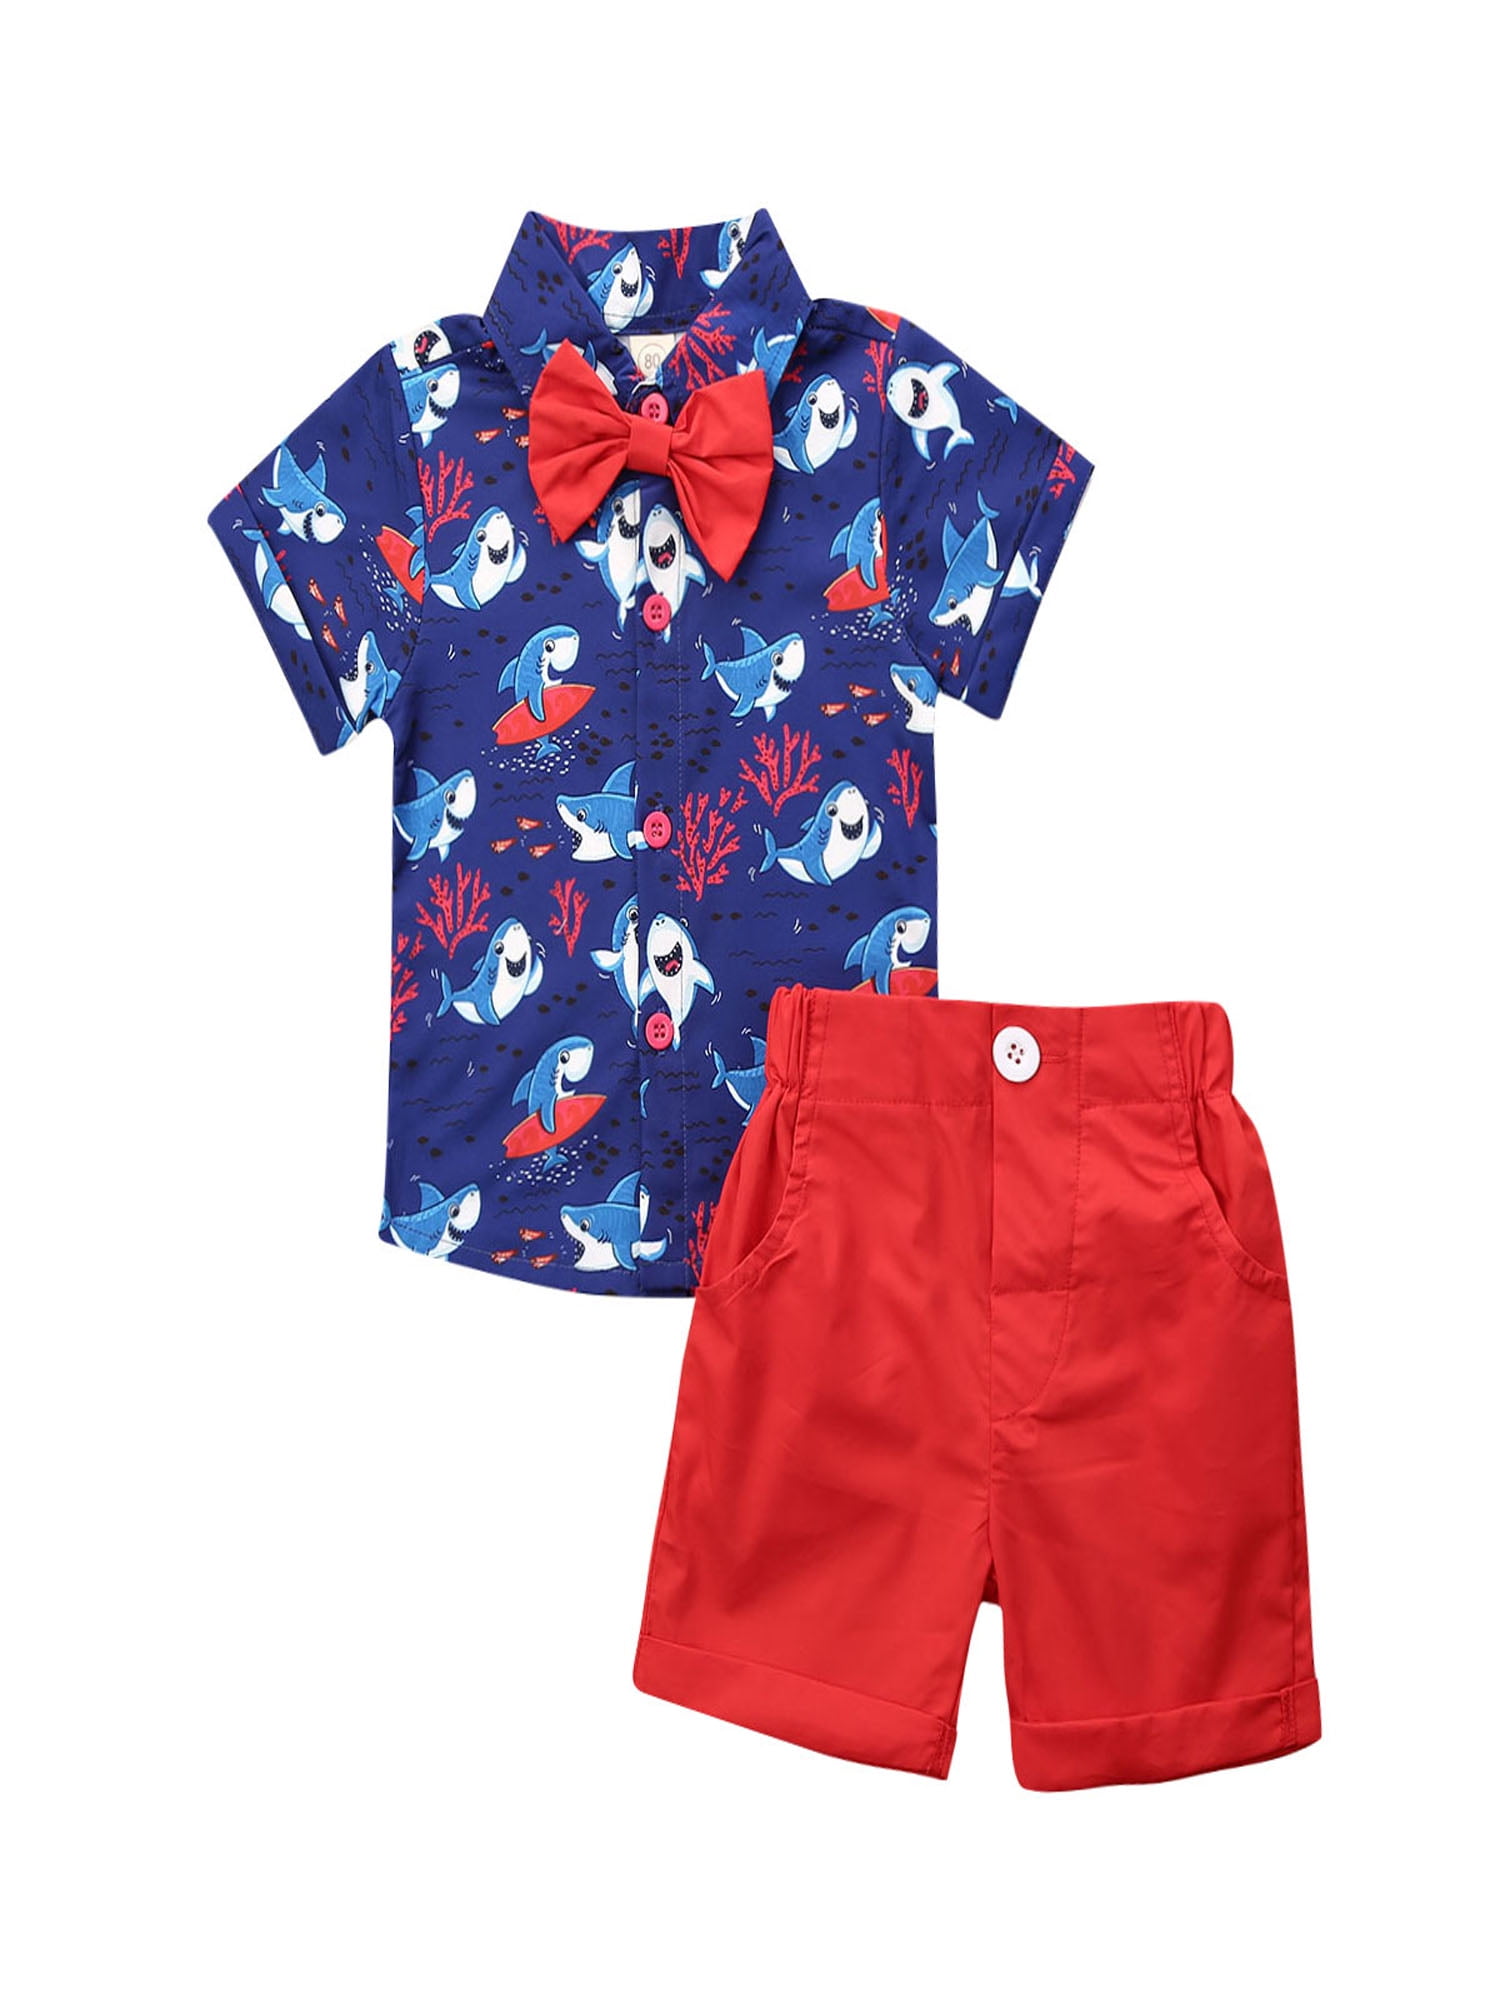 2PCS Toddler Baby Boy Kids Gentleman Shirt Tops+Pants Shorts Clothes Outfits Set